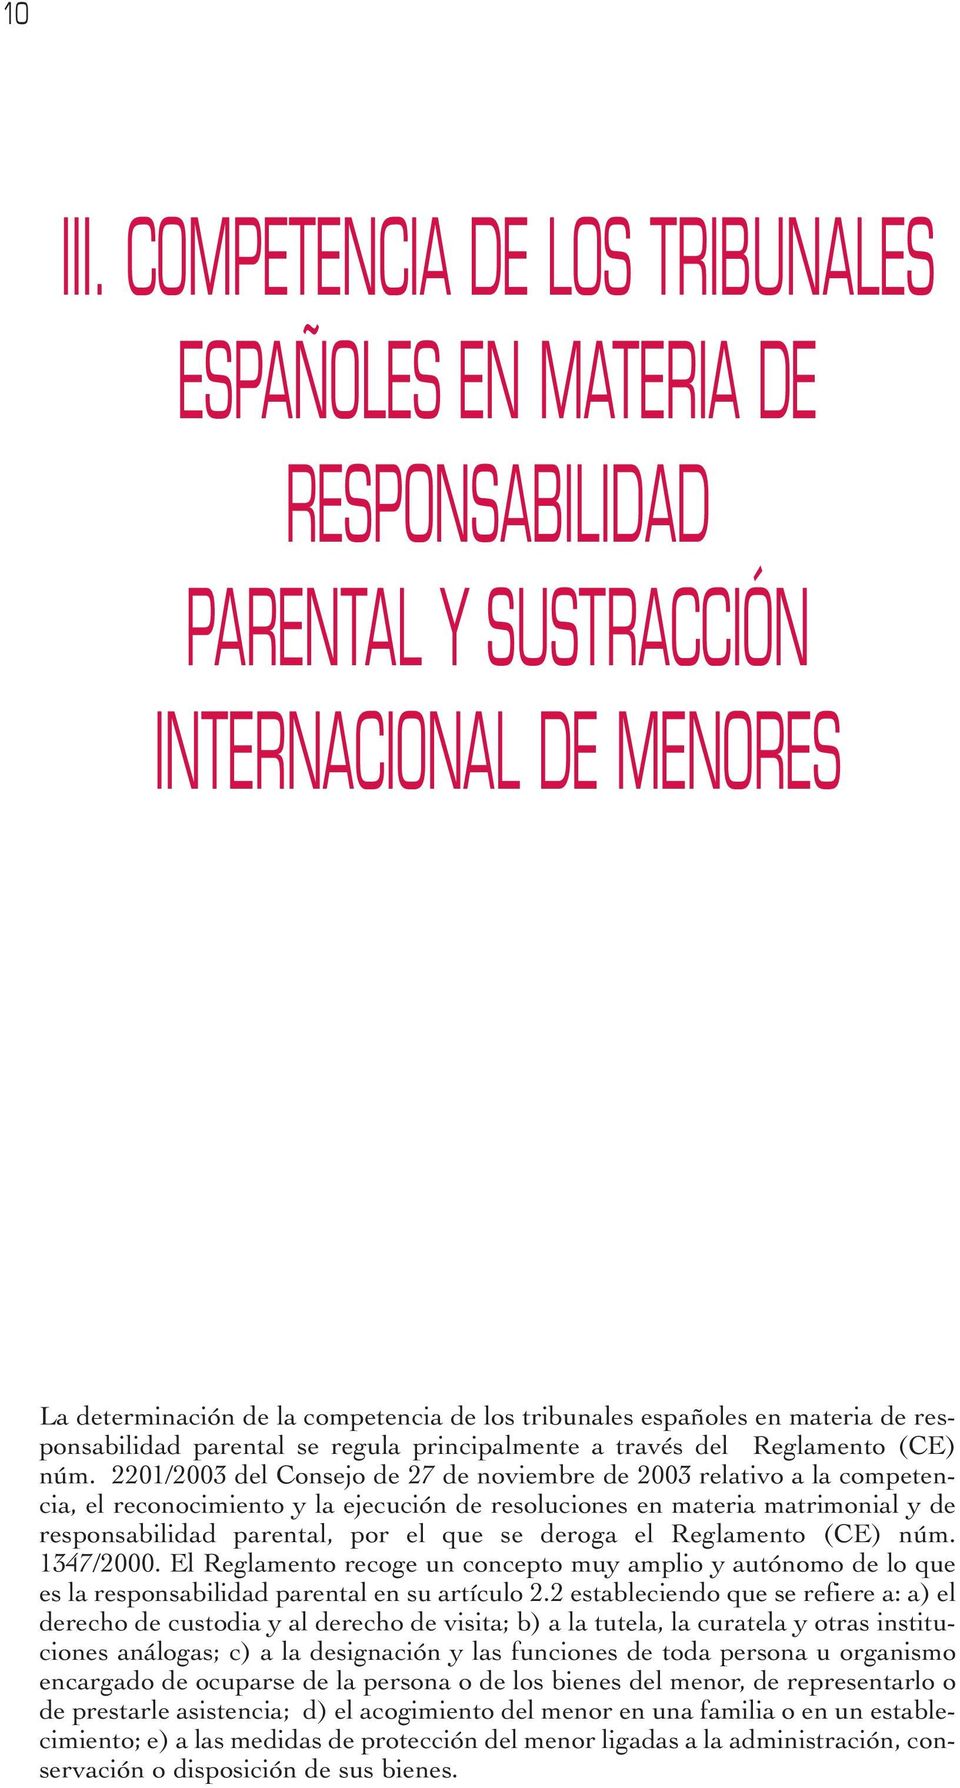 responsabilidad parental se regula principalmente a través del Reglamento (CE) núm.